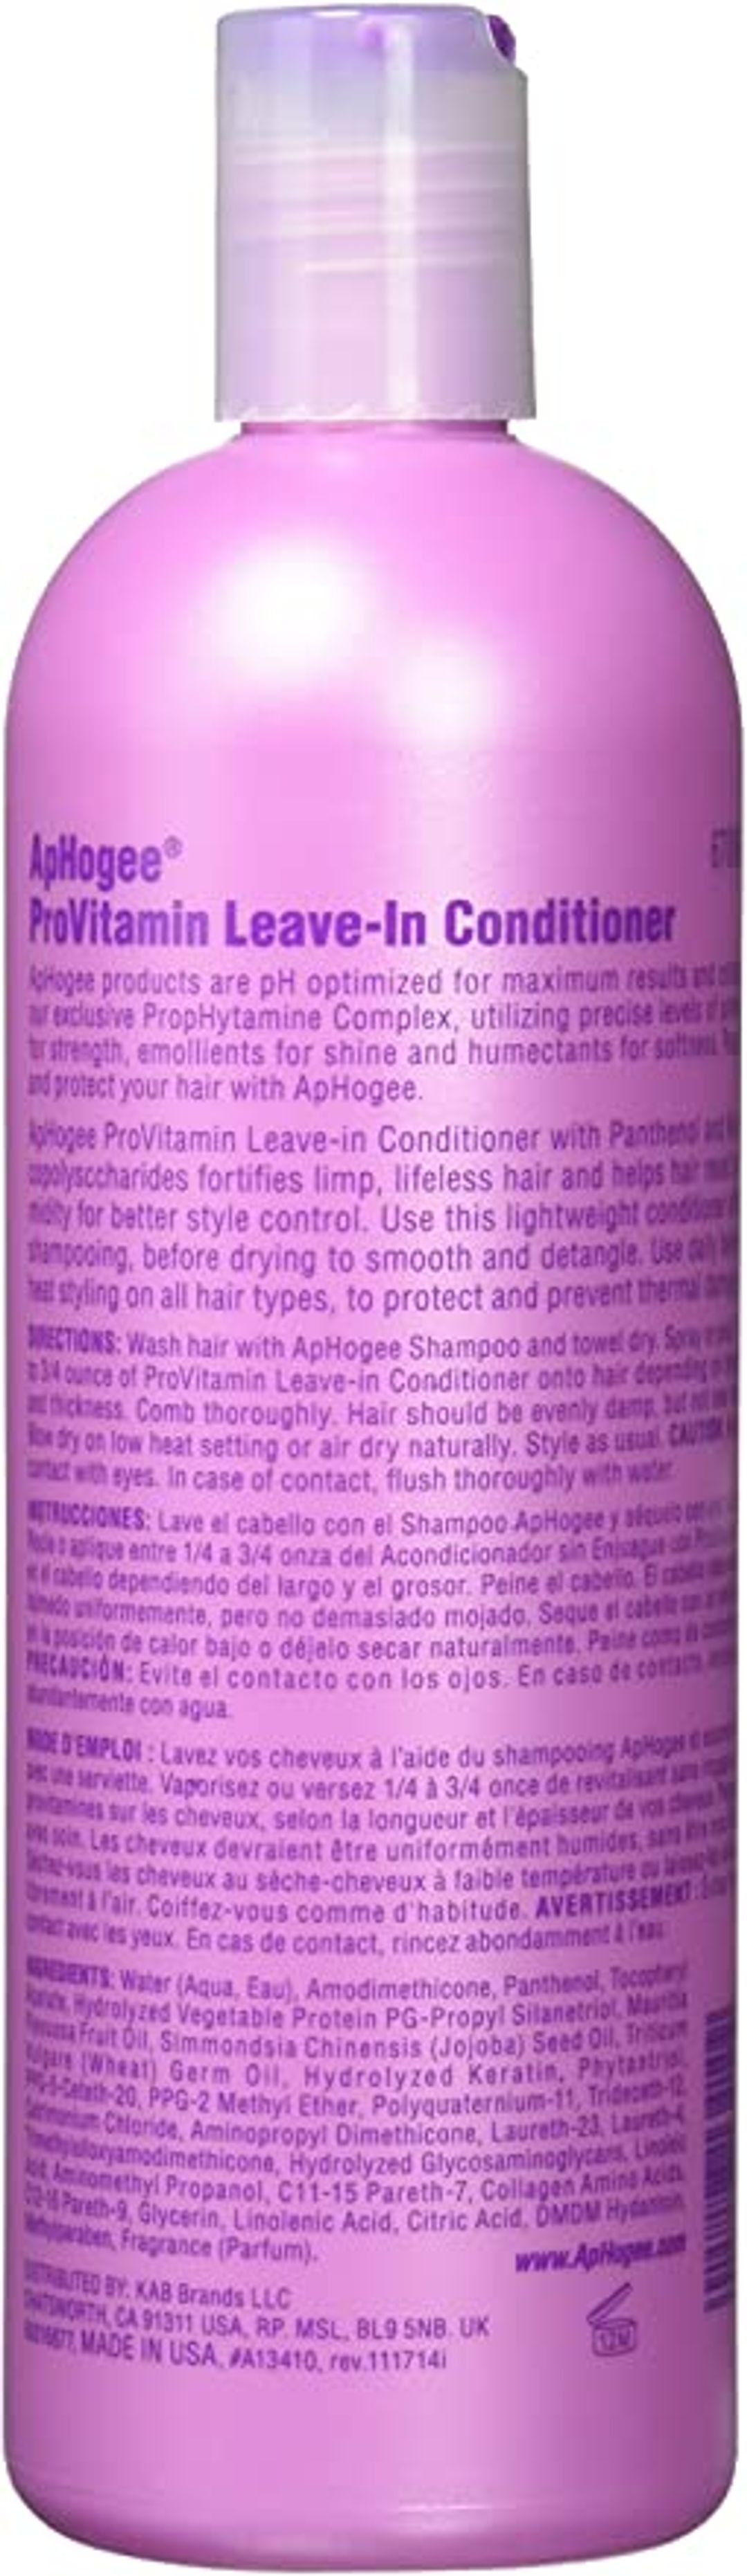 ApHogee Pro-vitamin Leave-in Conditioner - 16oz